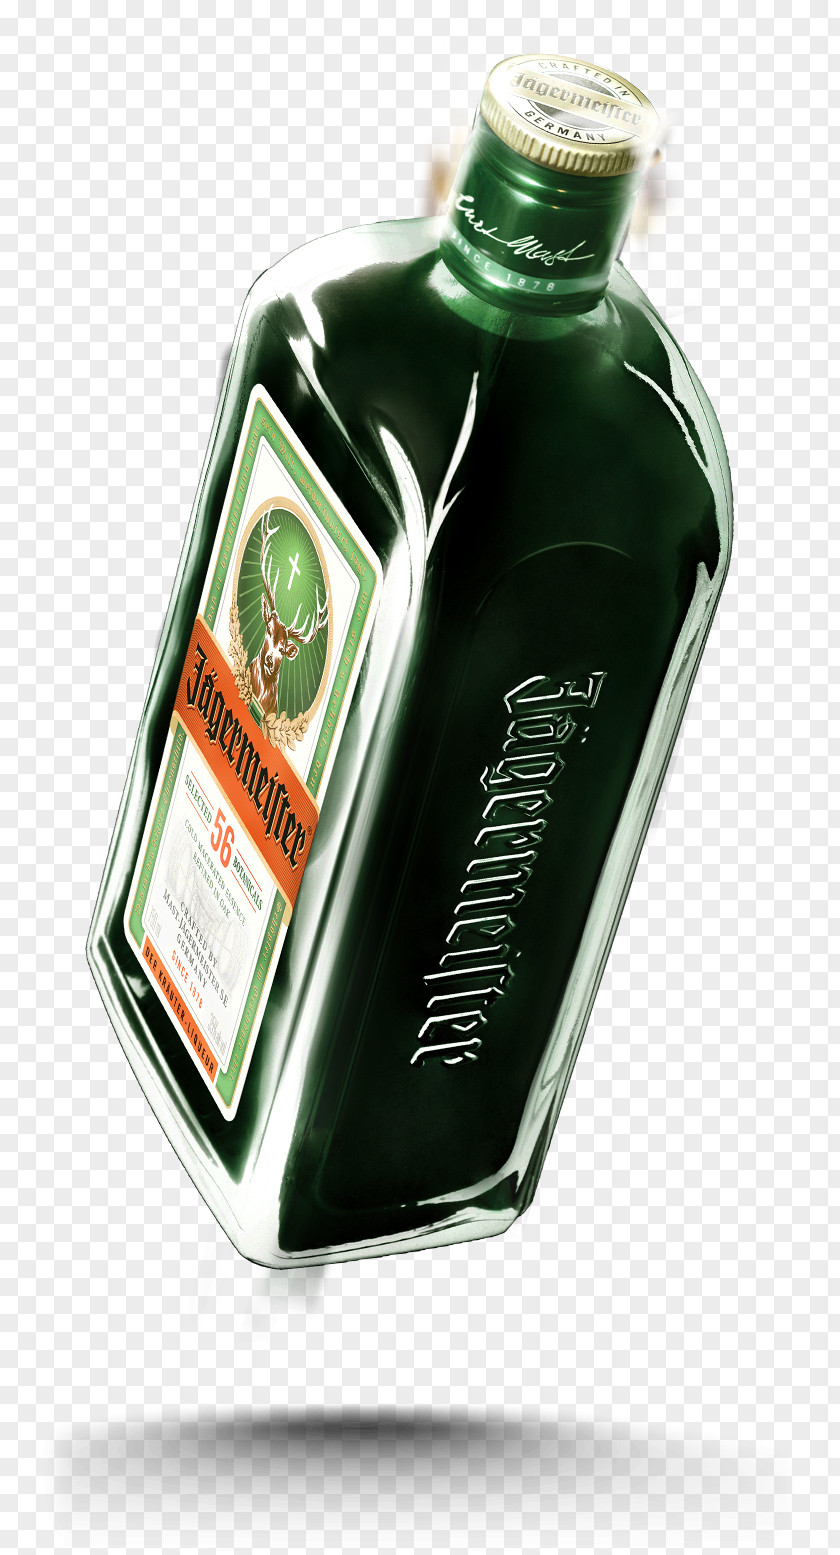 Bottle Jägermeister Liqueur Alcoholic Drink PNG